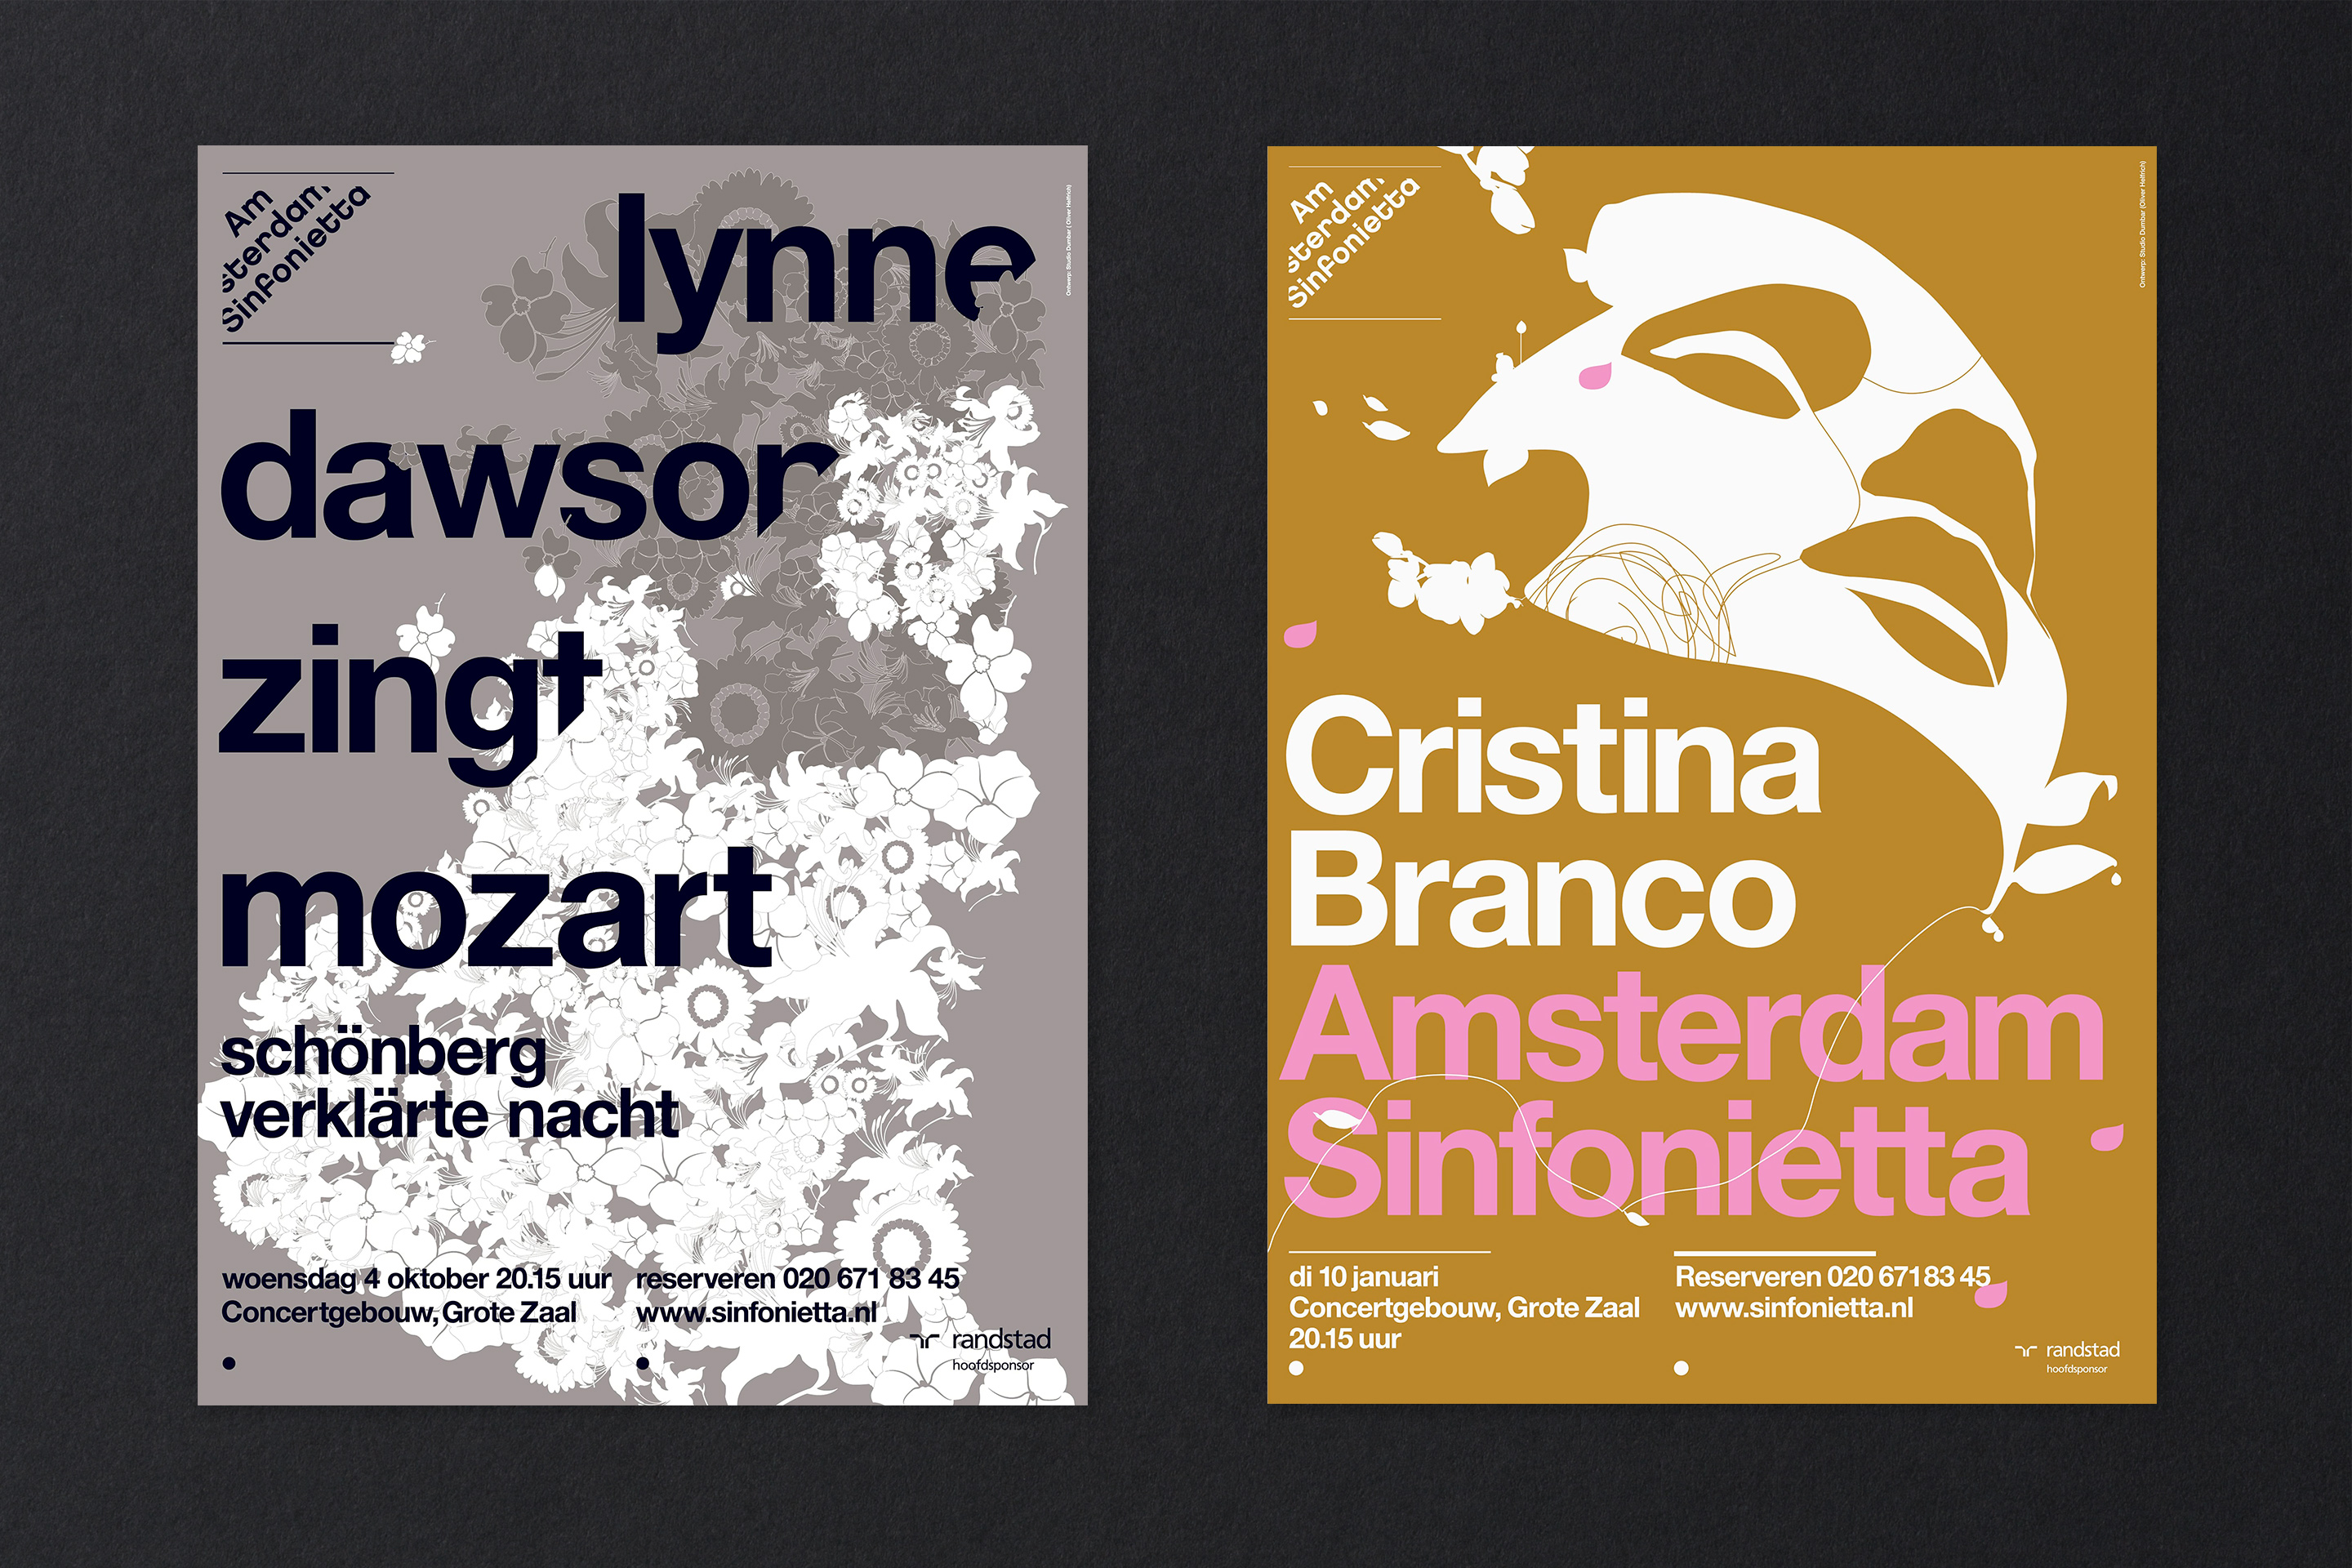 Amsterdam Sinfonietta Posters Lynne Dawson